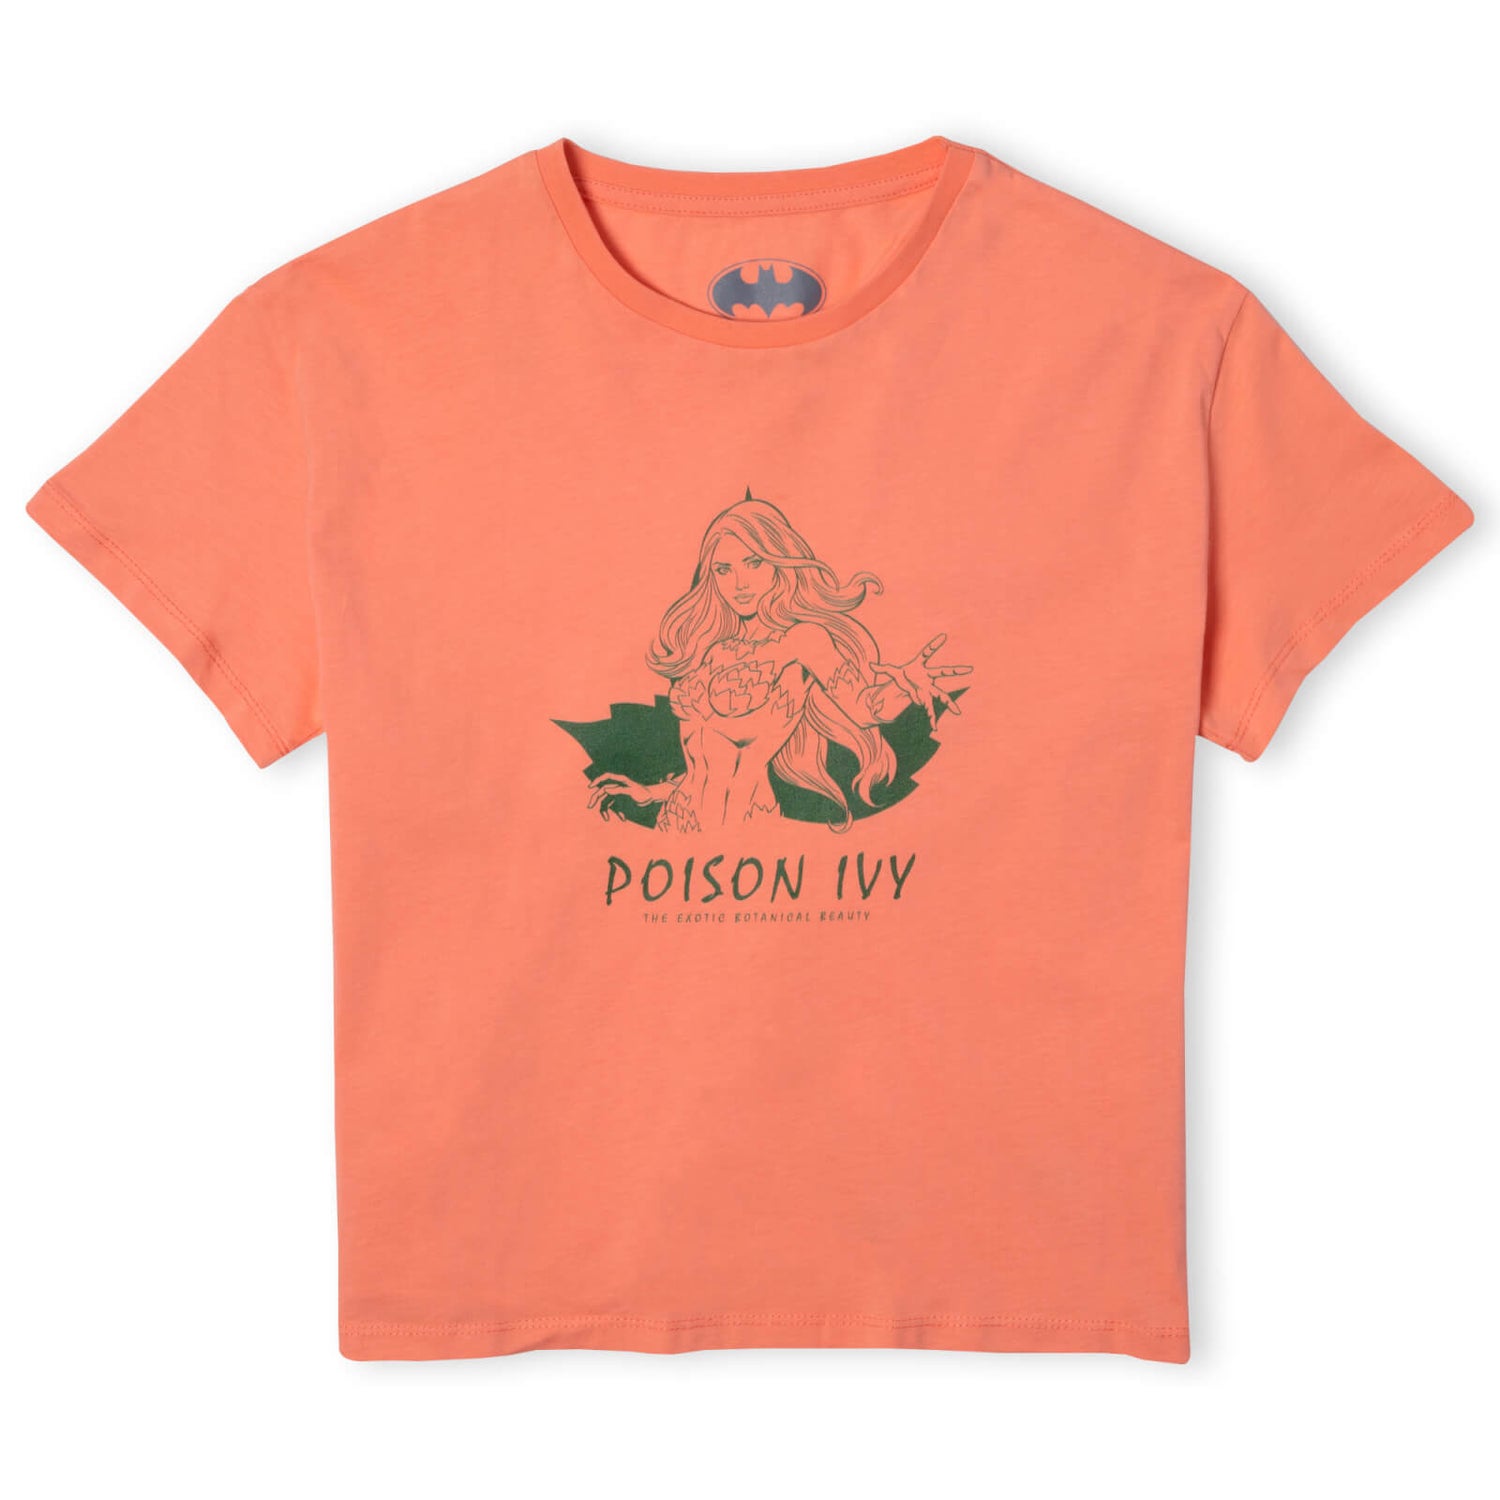 Batman Villains Poison Ivy Damen Cropped T-Shirt - Korallenrot - XL